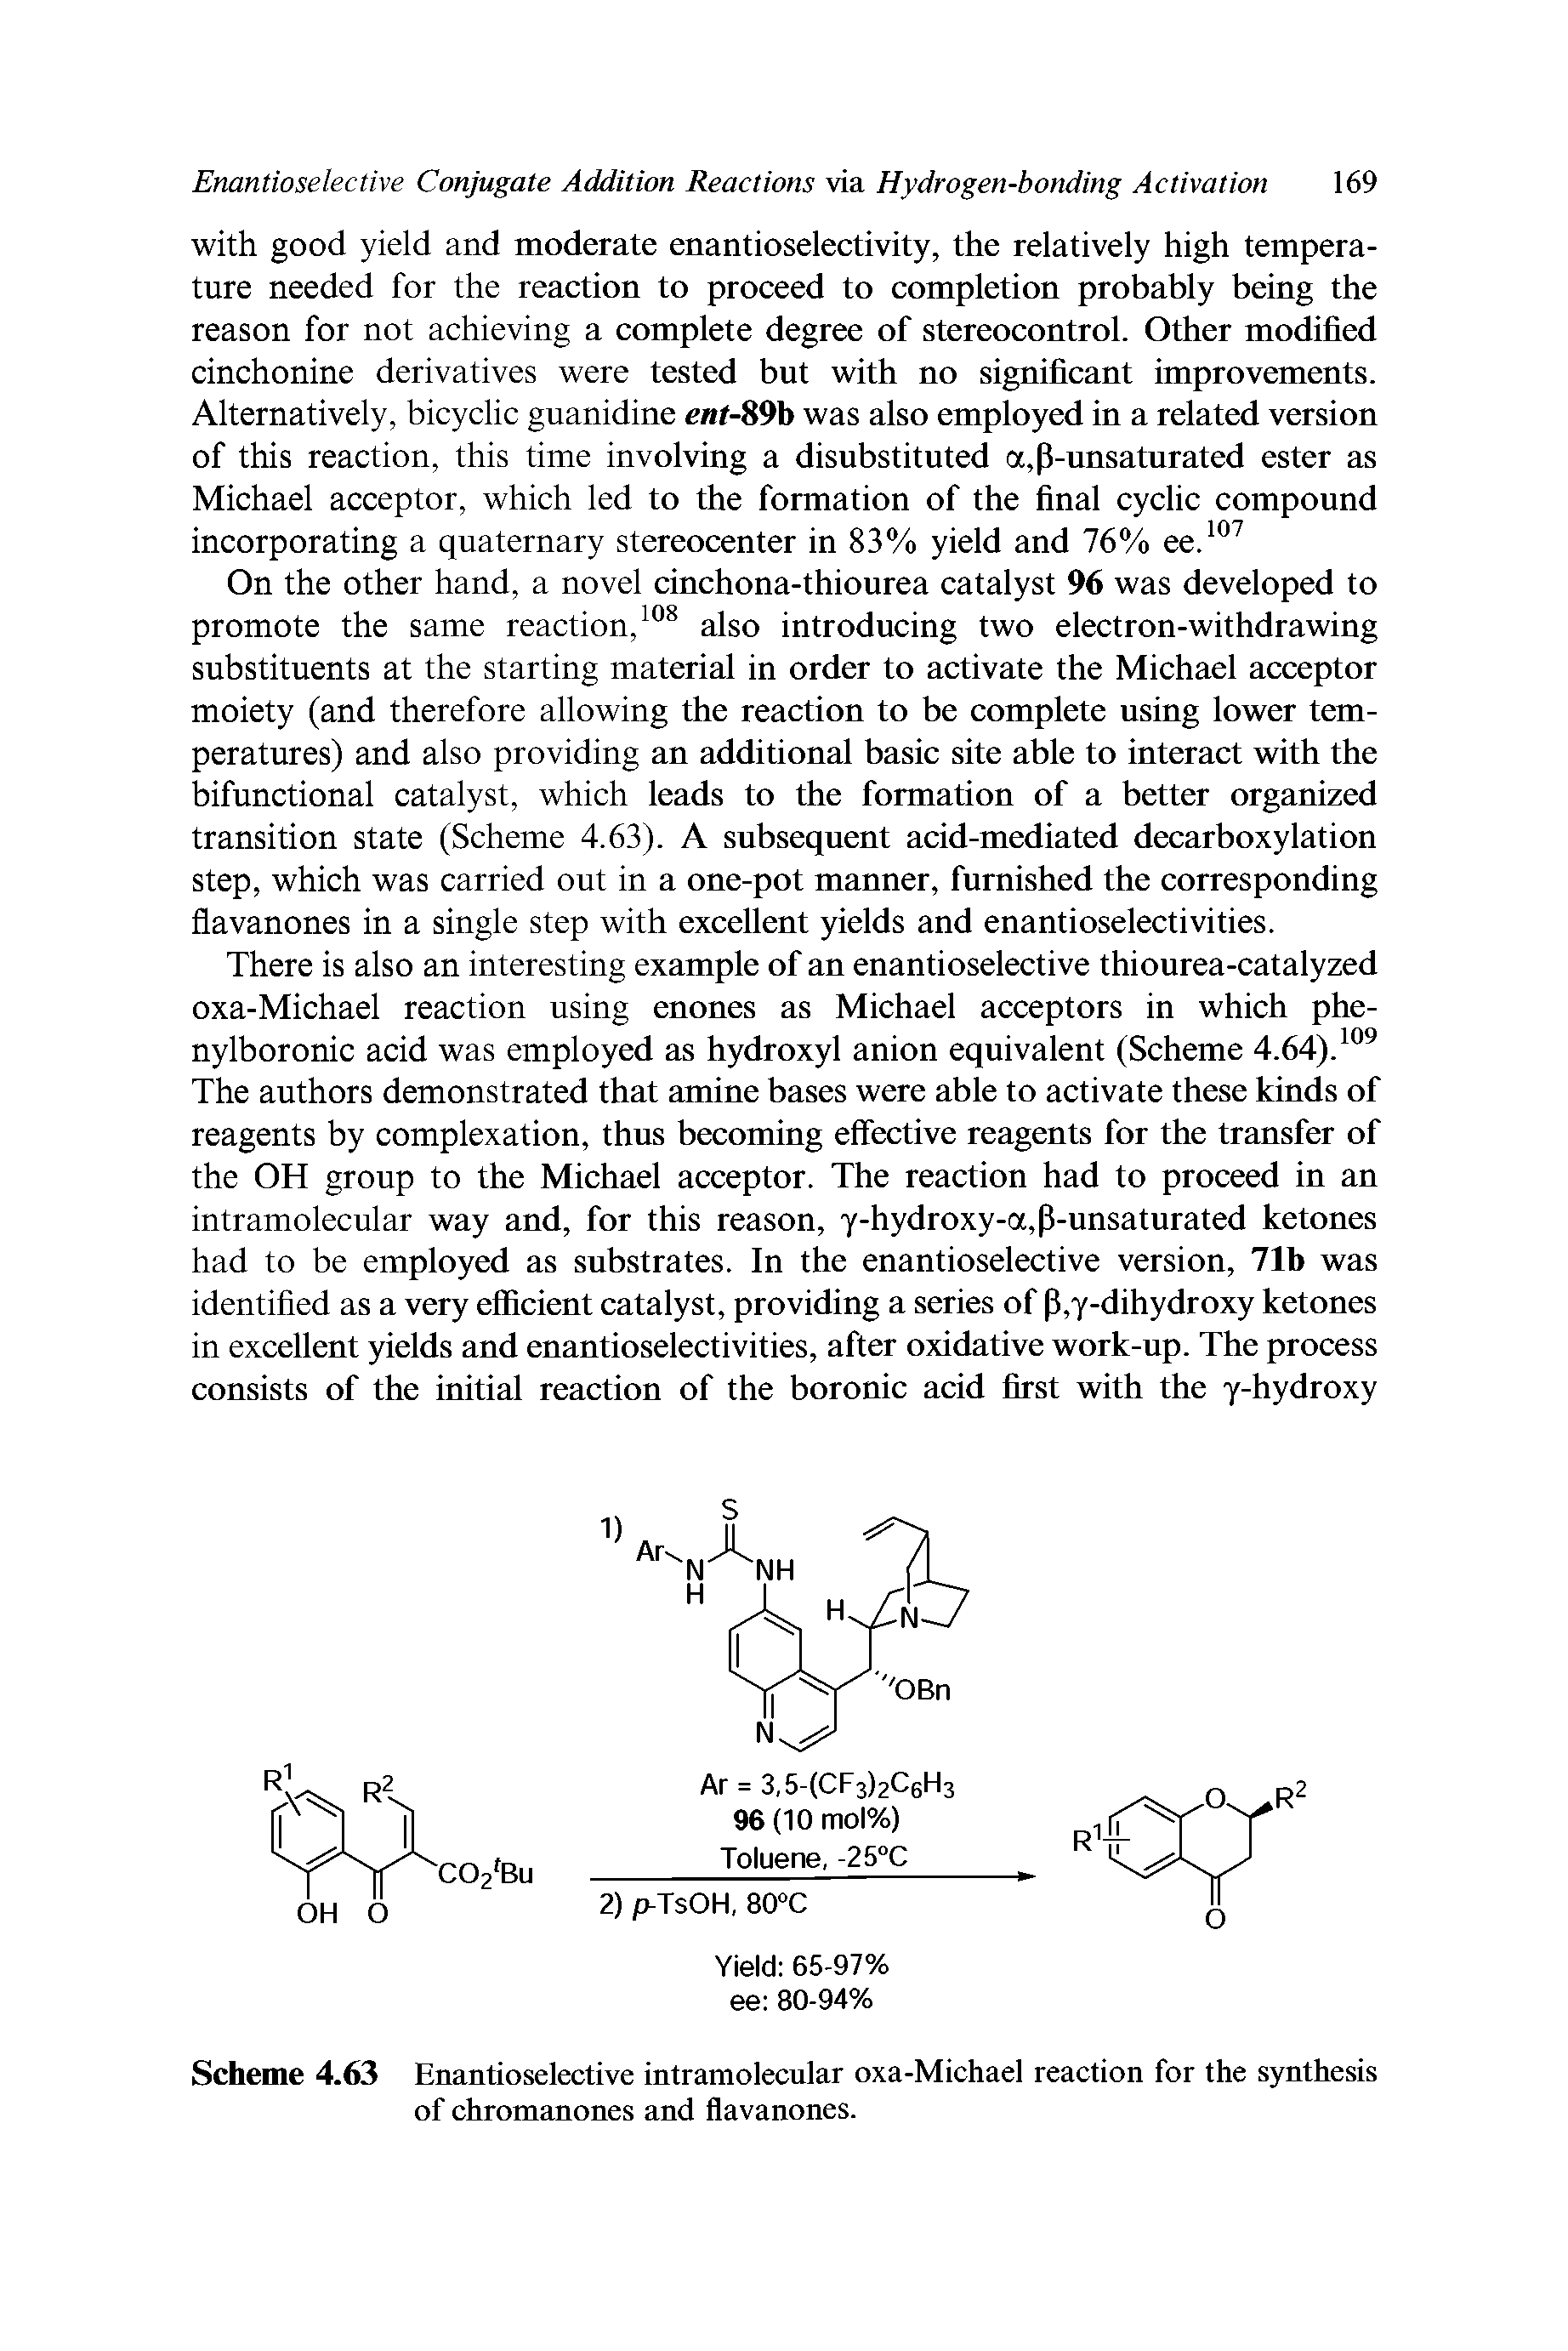 Scheme 4.63 Enantioselective intramolecular oxa-Michael reaction for the synthesis of chromanones and flavanones.